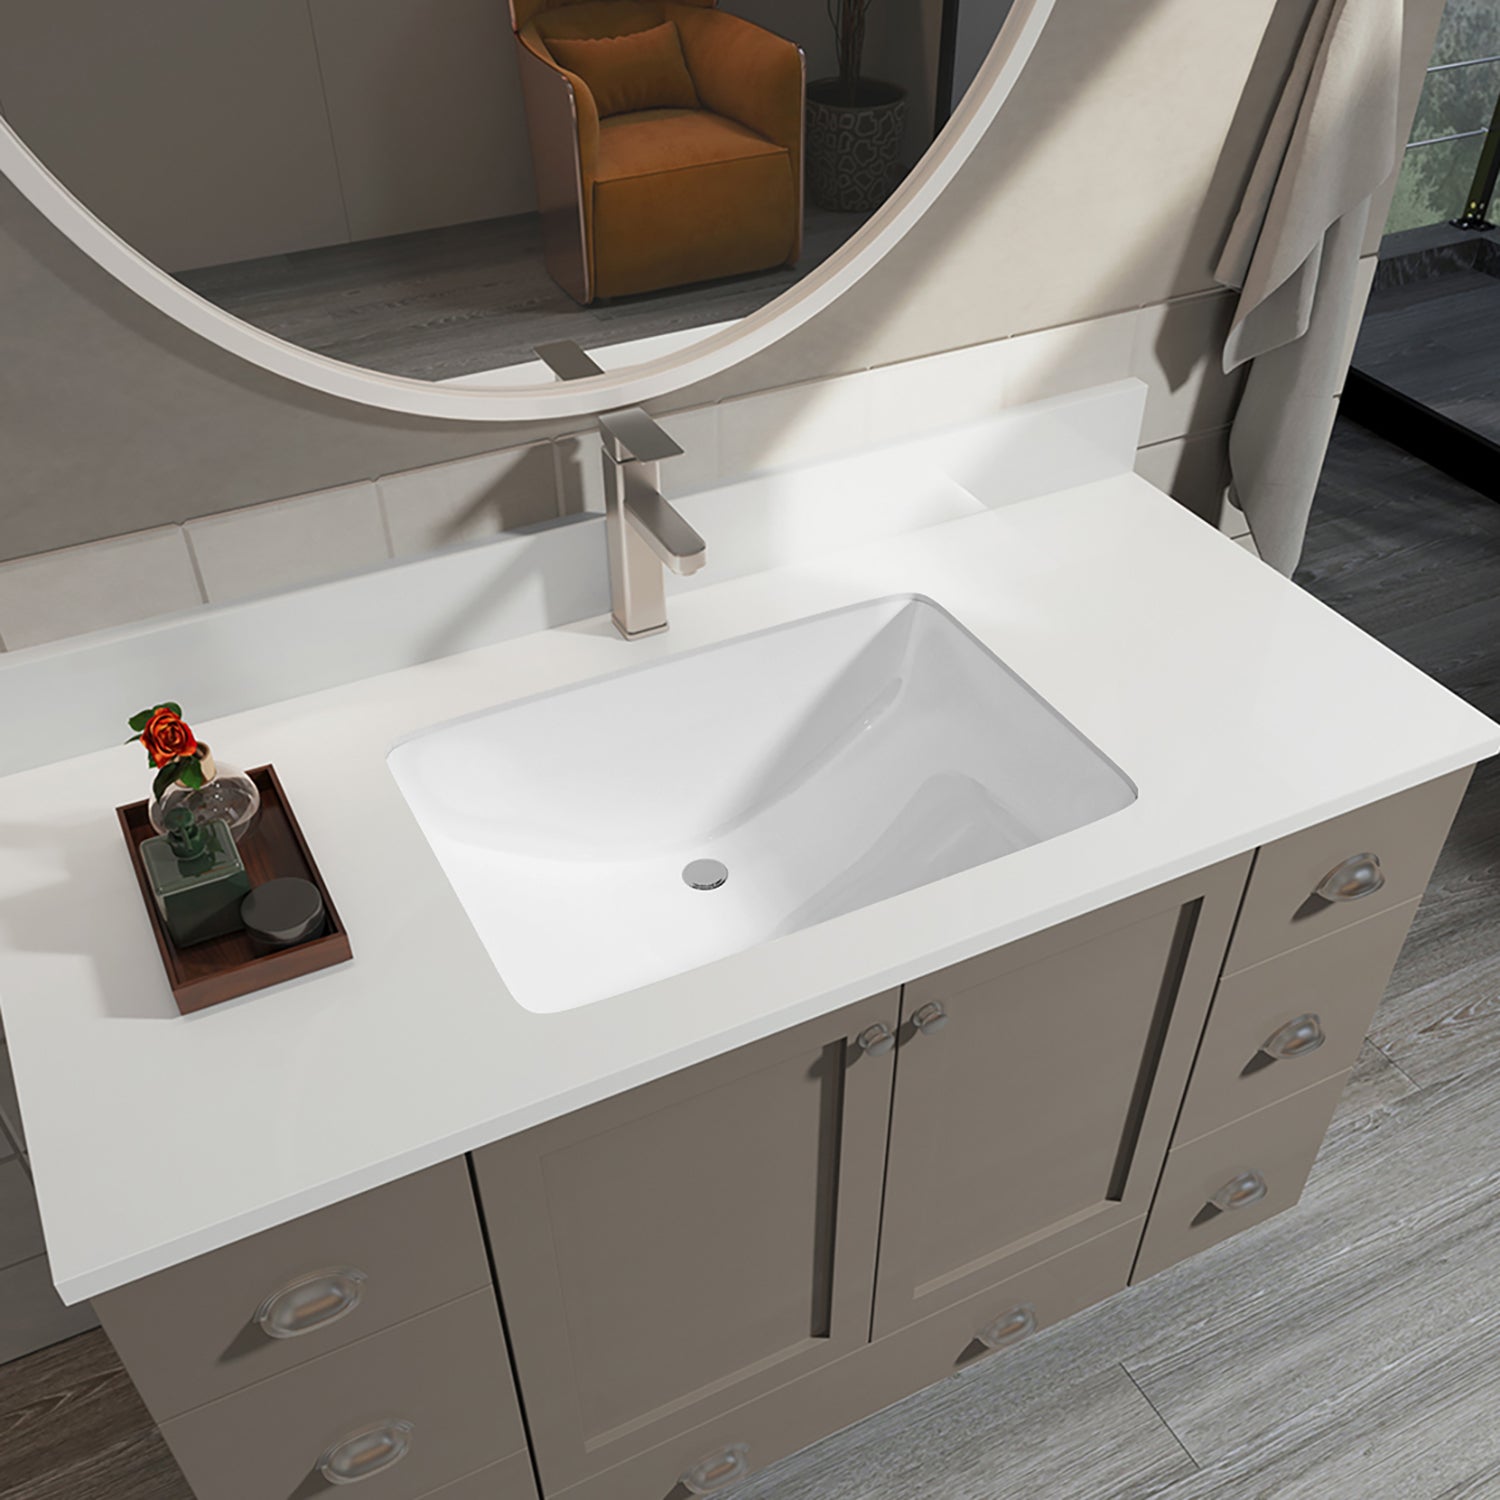 Sinber 21 Inches Undermount Rectangular Bathroom Sink with Overflow Ceramic White Finish C1312-OL